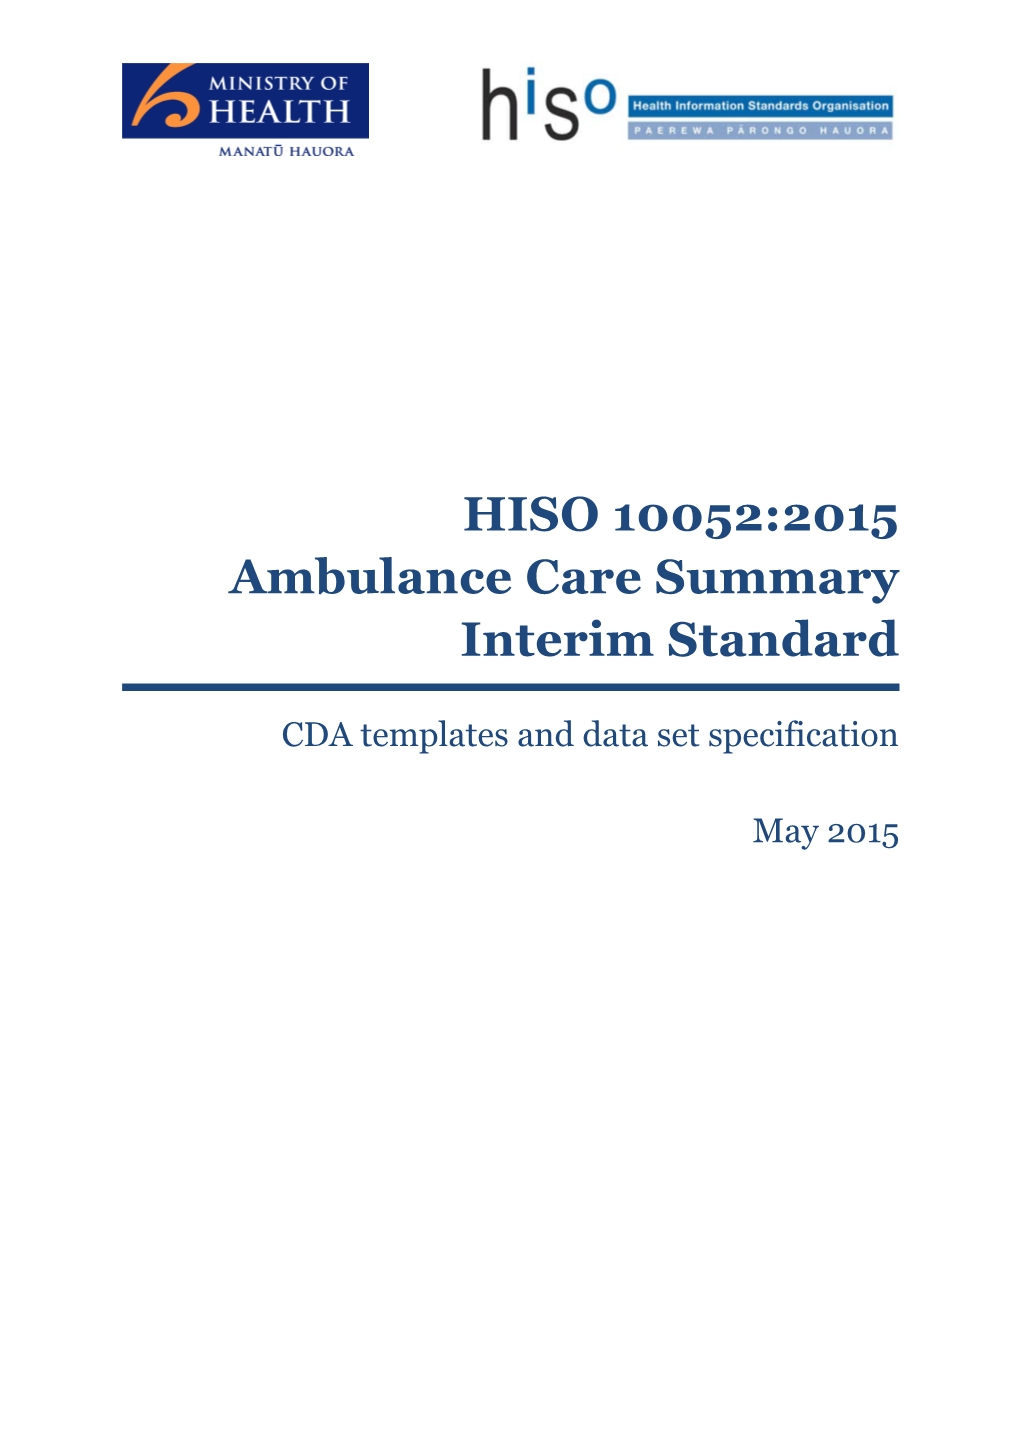 HISO 10052:2015 Ambulance Care Summary Interim Standard